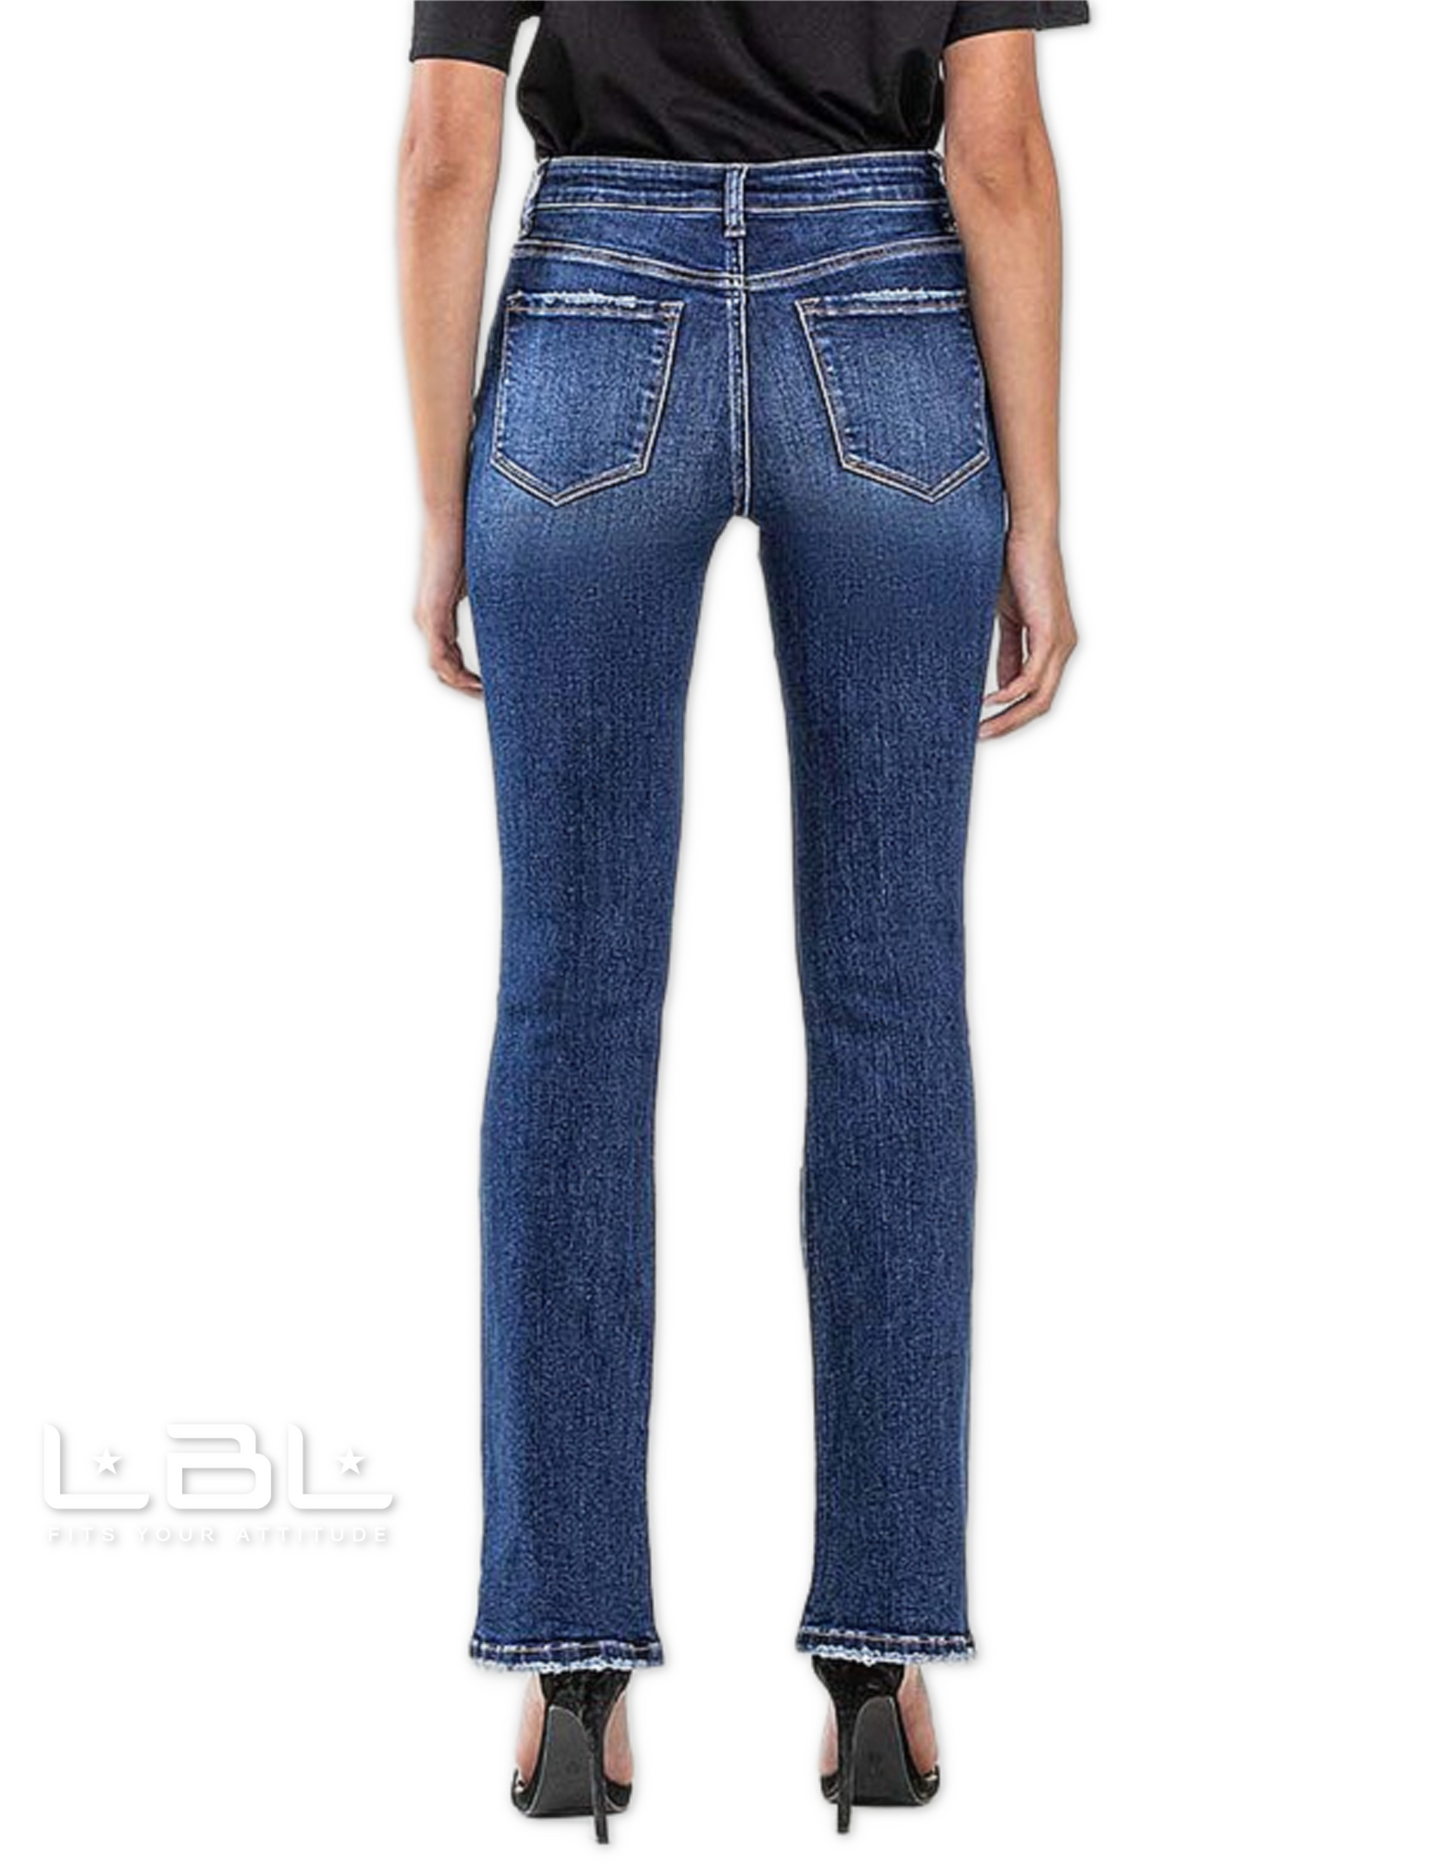 High-Rise Boot Cut Jean